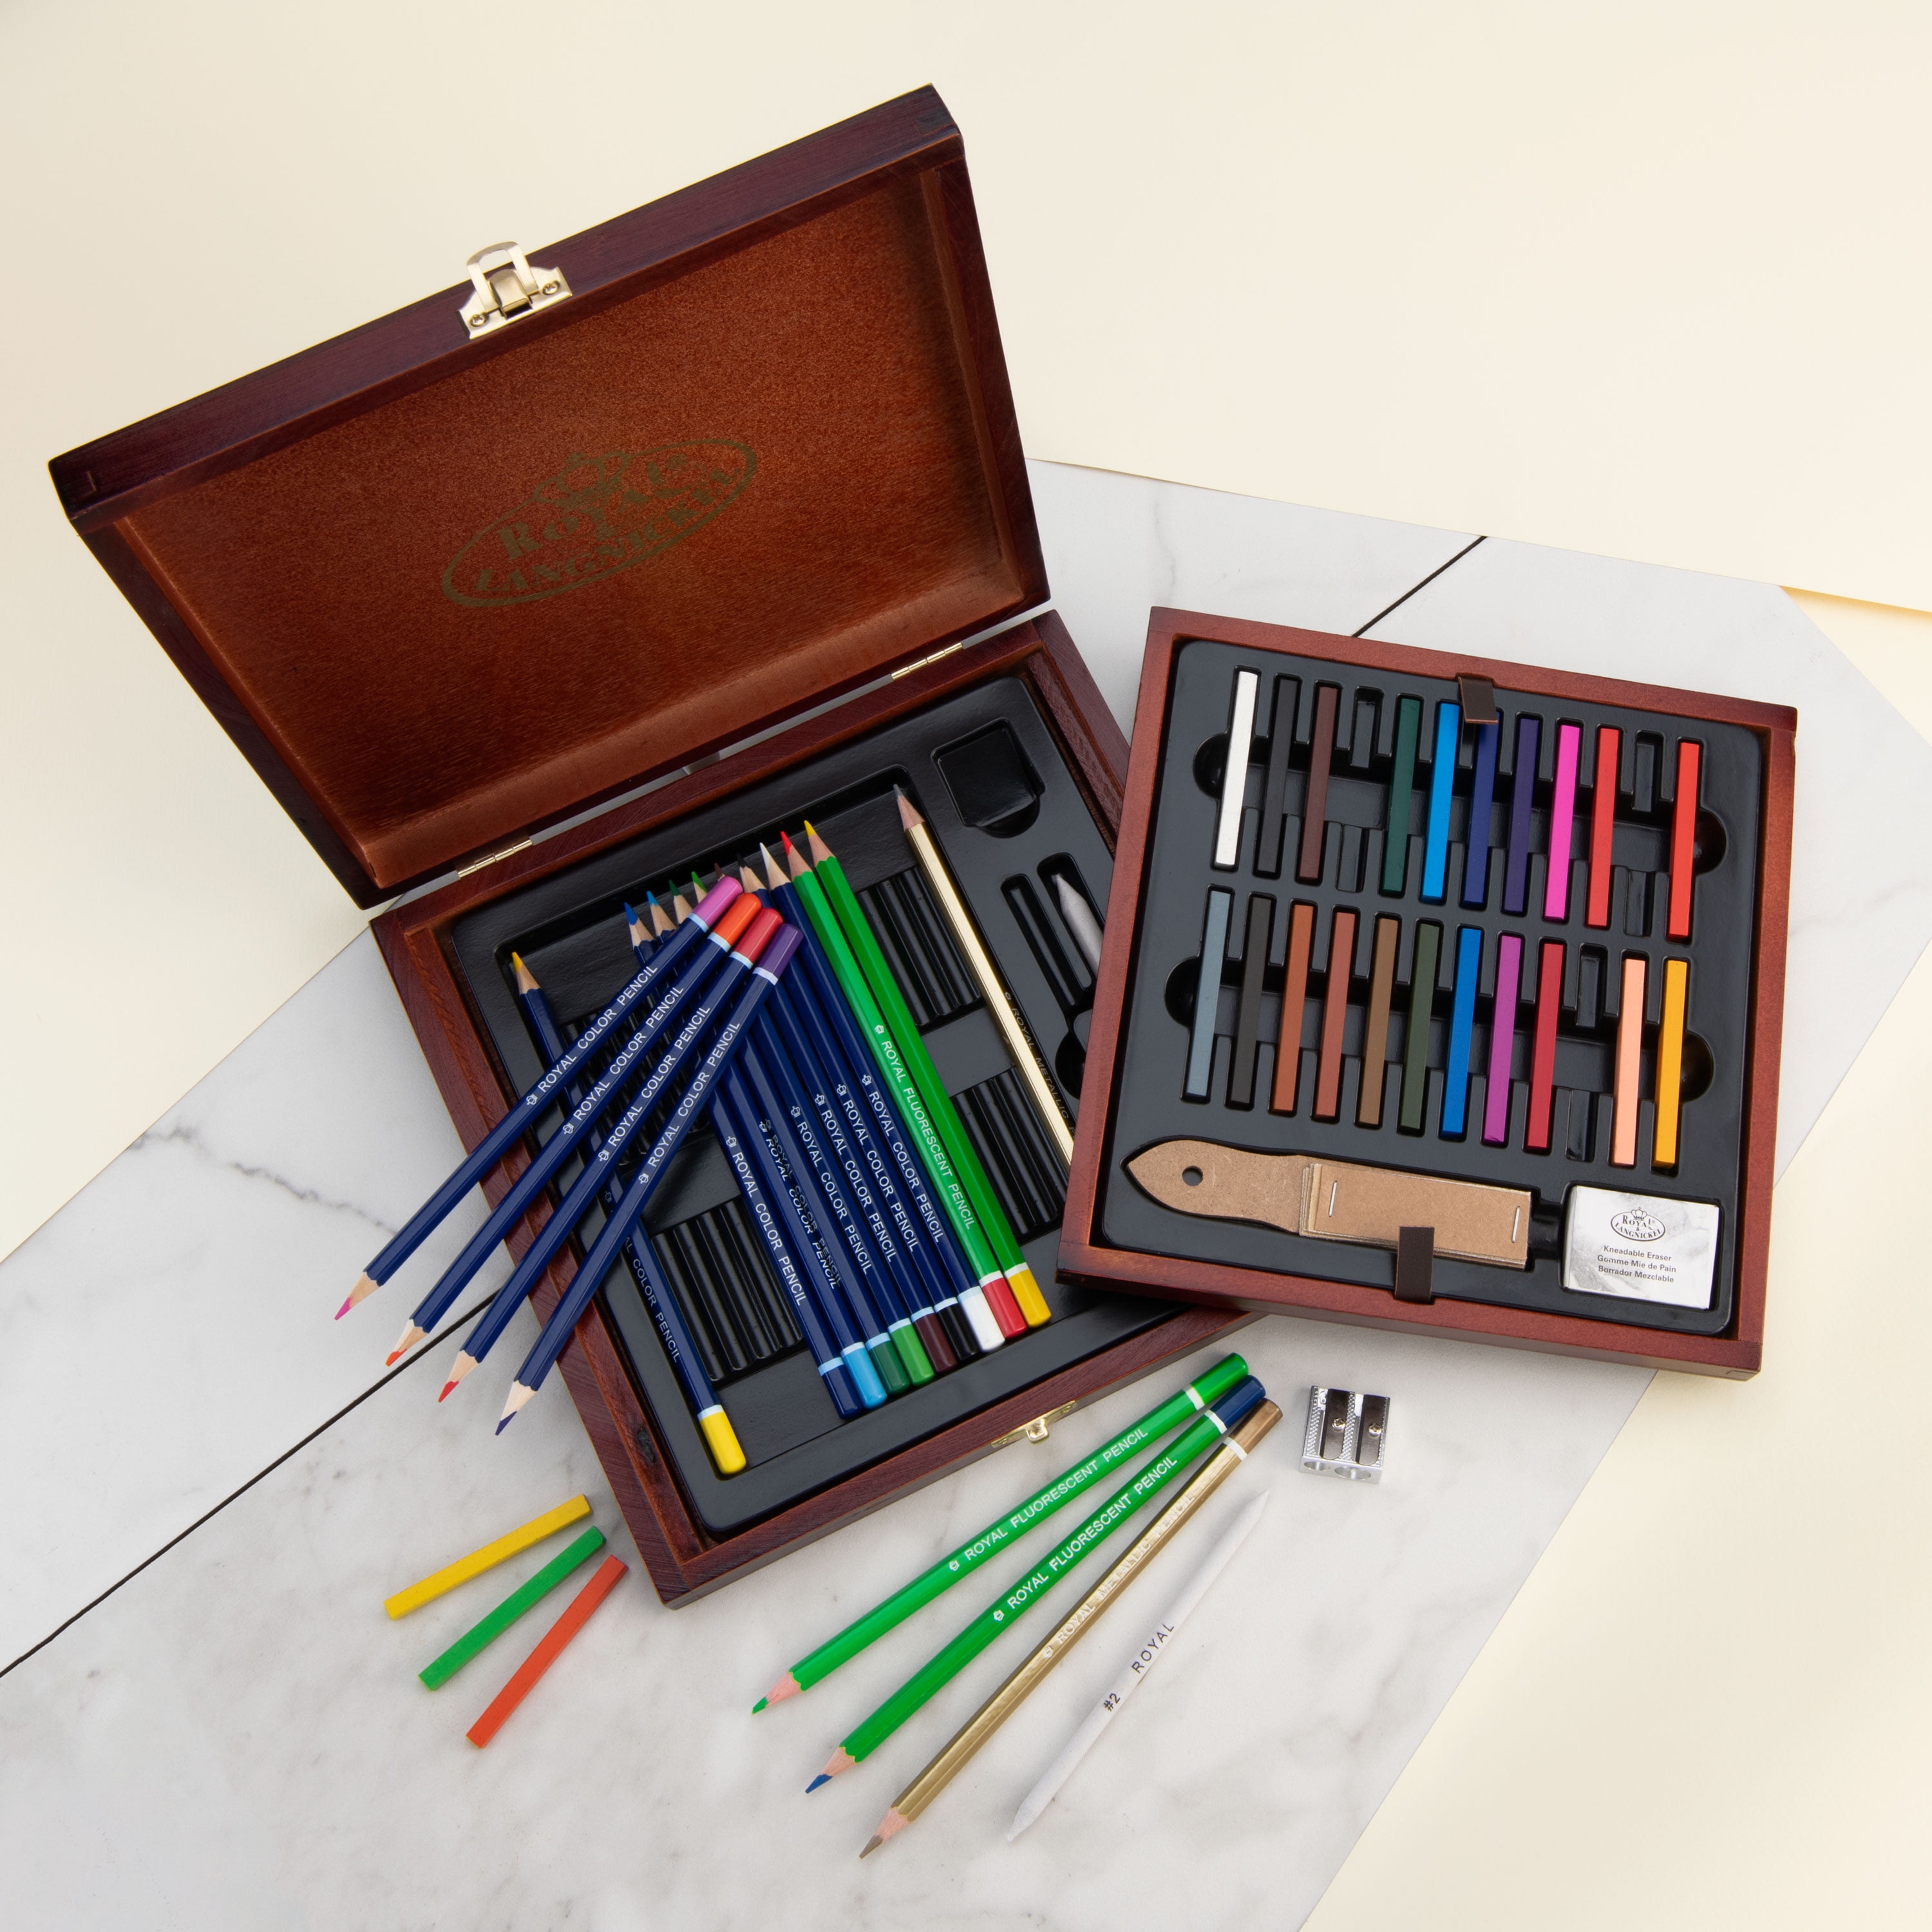 Royal & Langnickel SPEN-12 Essentials Sketching Pencil Set, 12-Piece